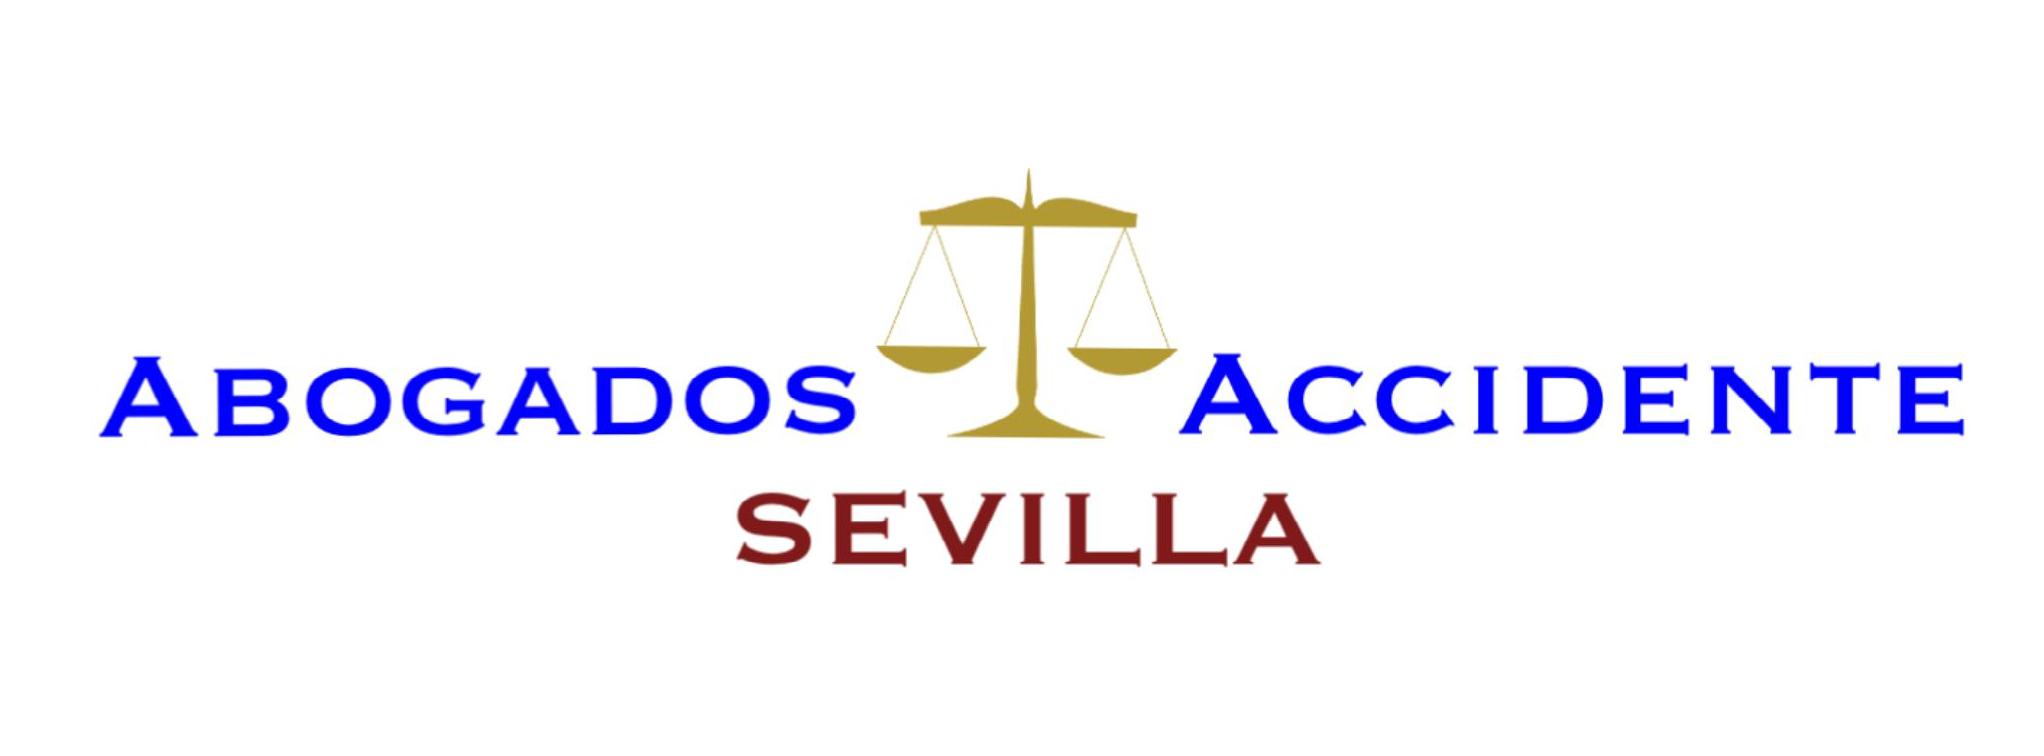 Abogados Accidente Tráfico Sevilla Indemnización lesión grave independiente